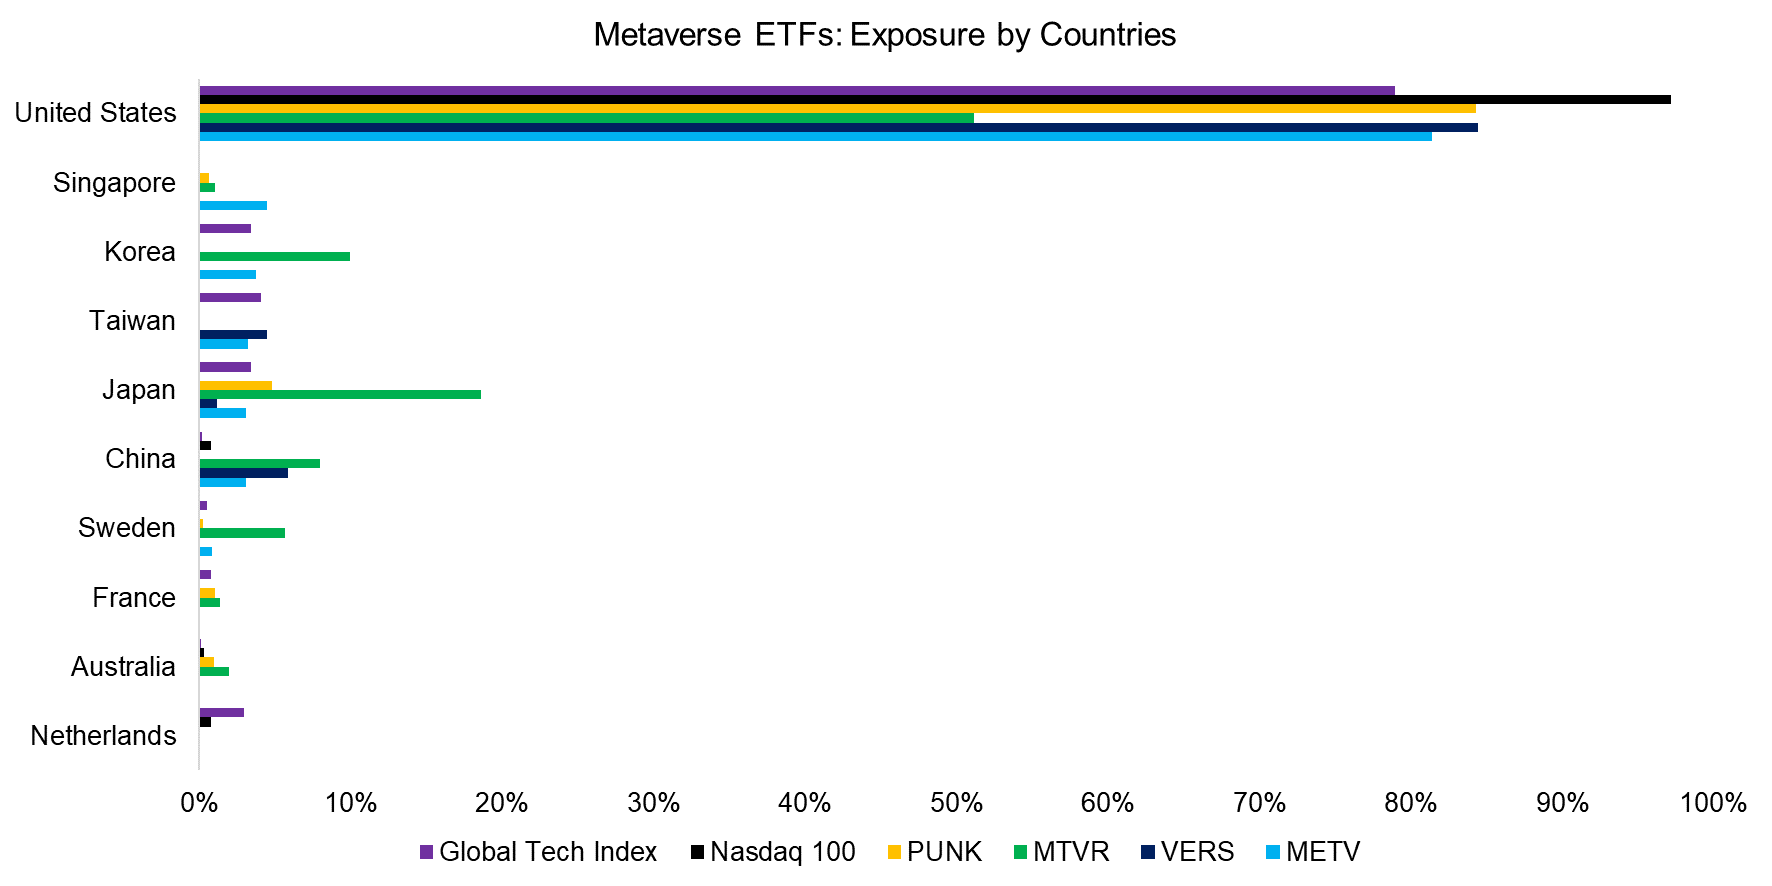 Metaverse ETFs Exposure by Countries